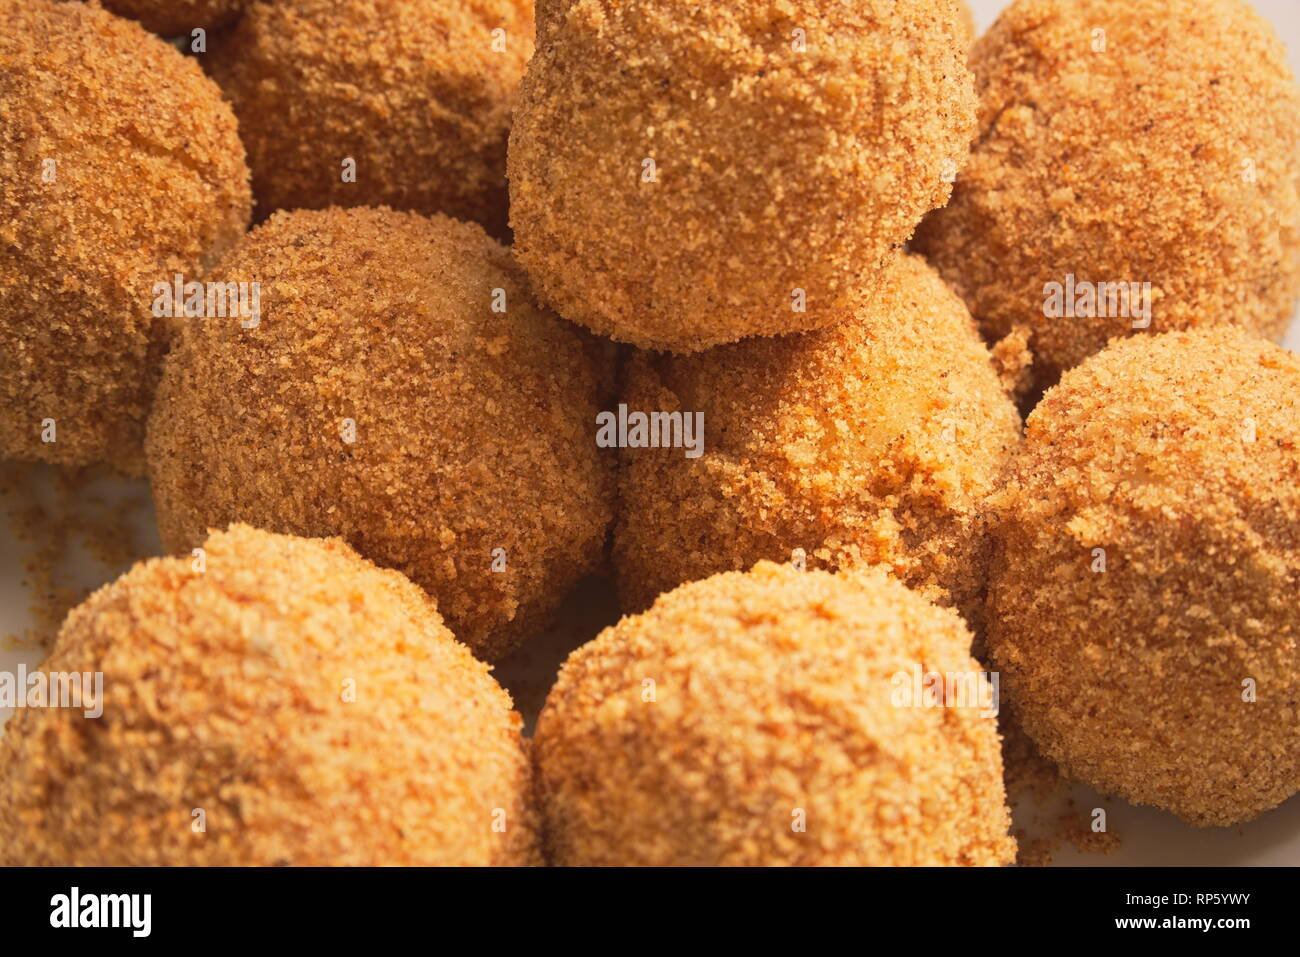 Plum Dumplings Covered in Bread Crumbs Closeup Stock Photo